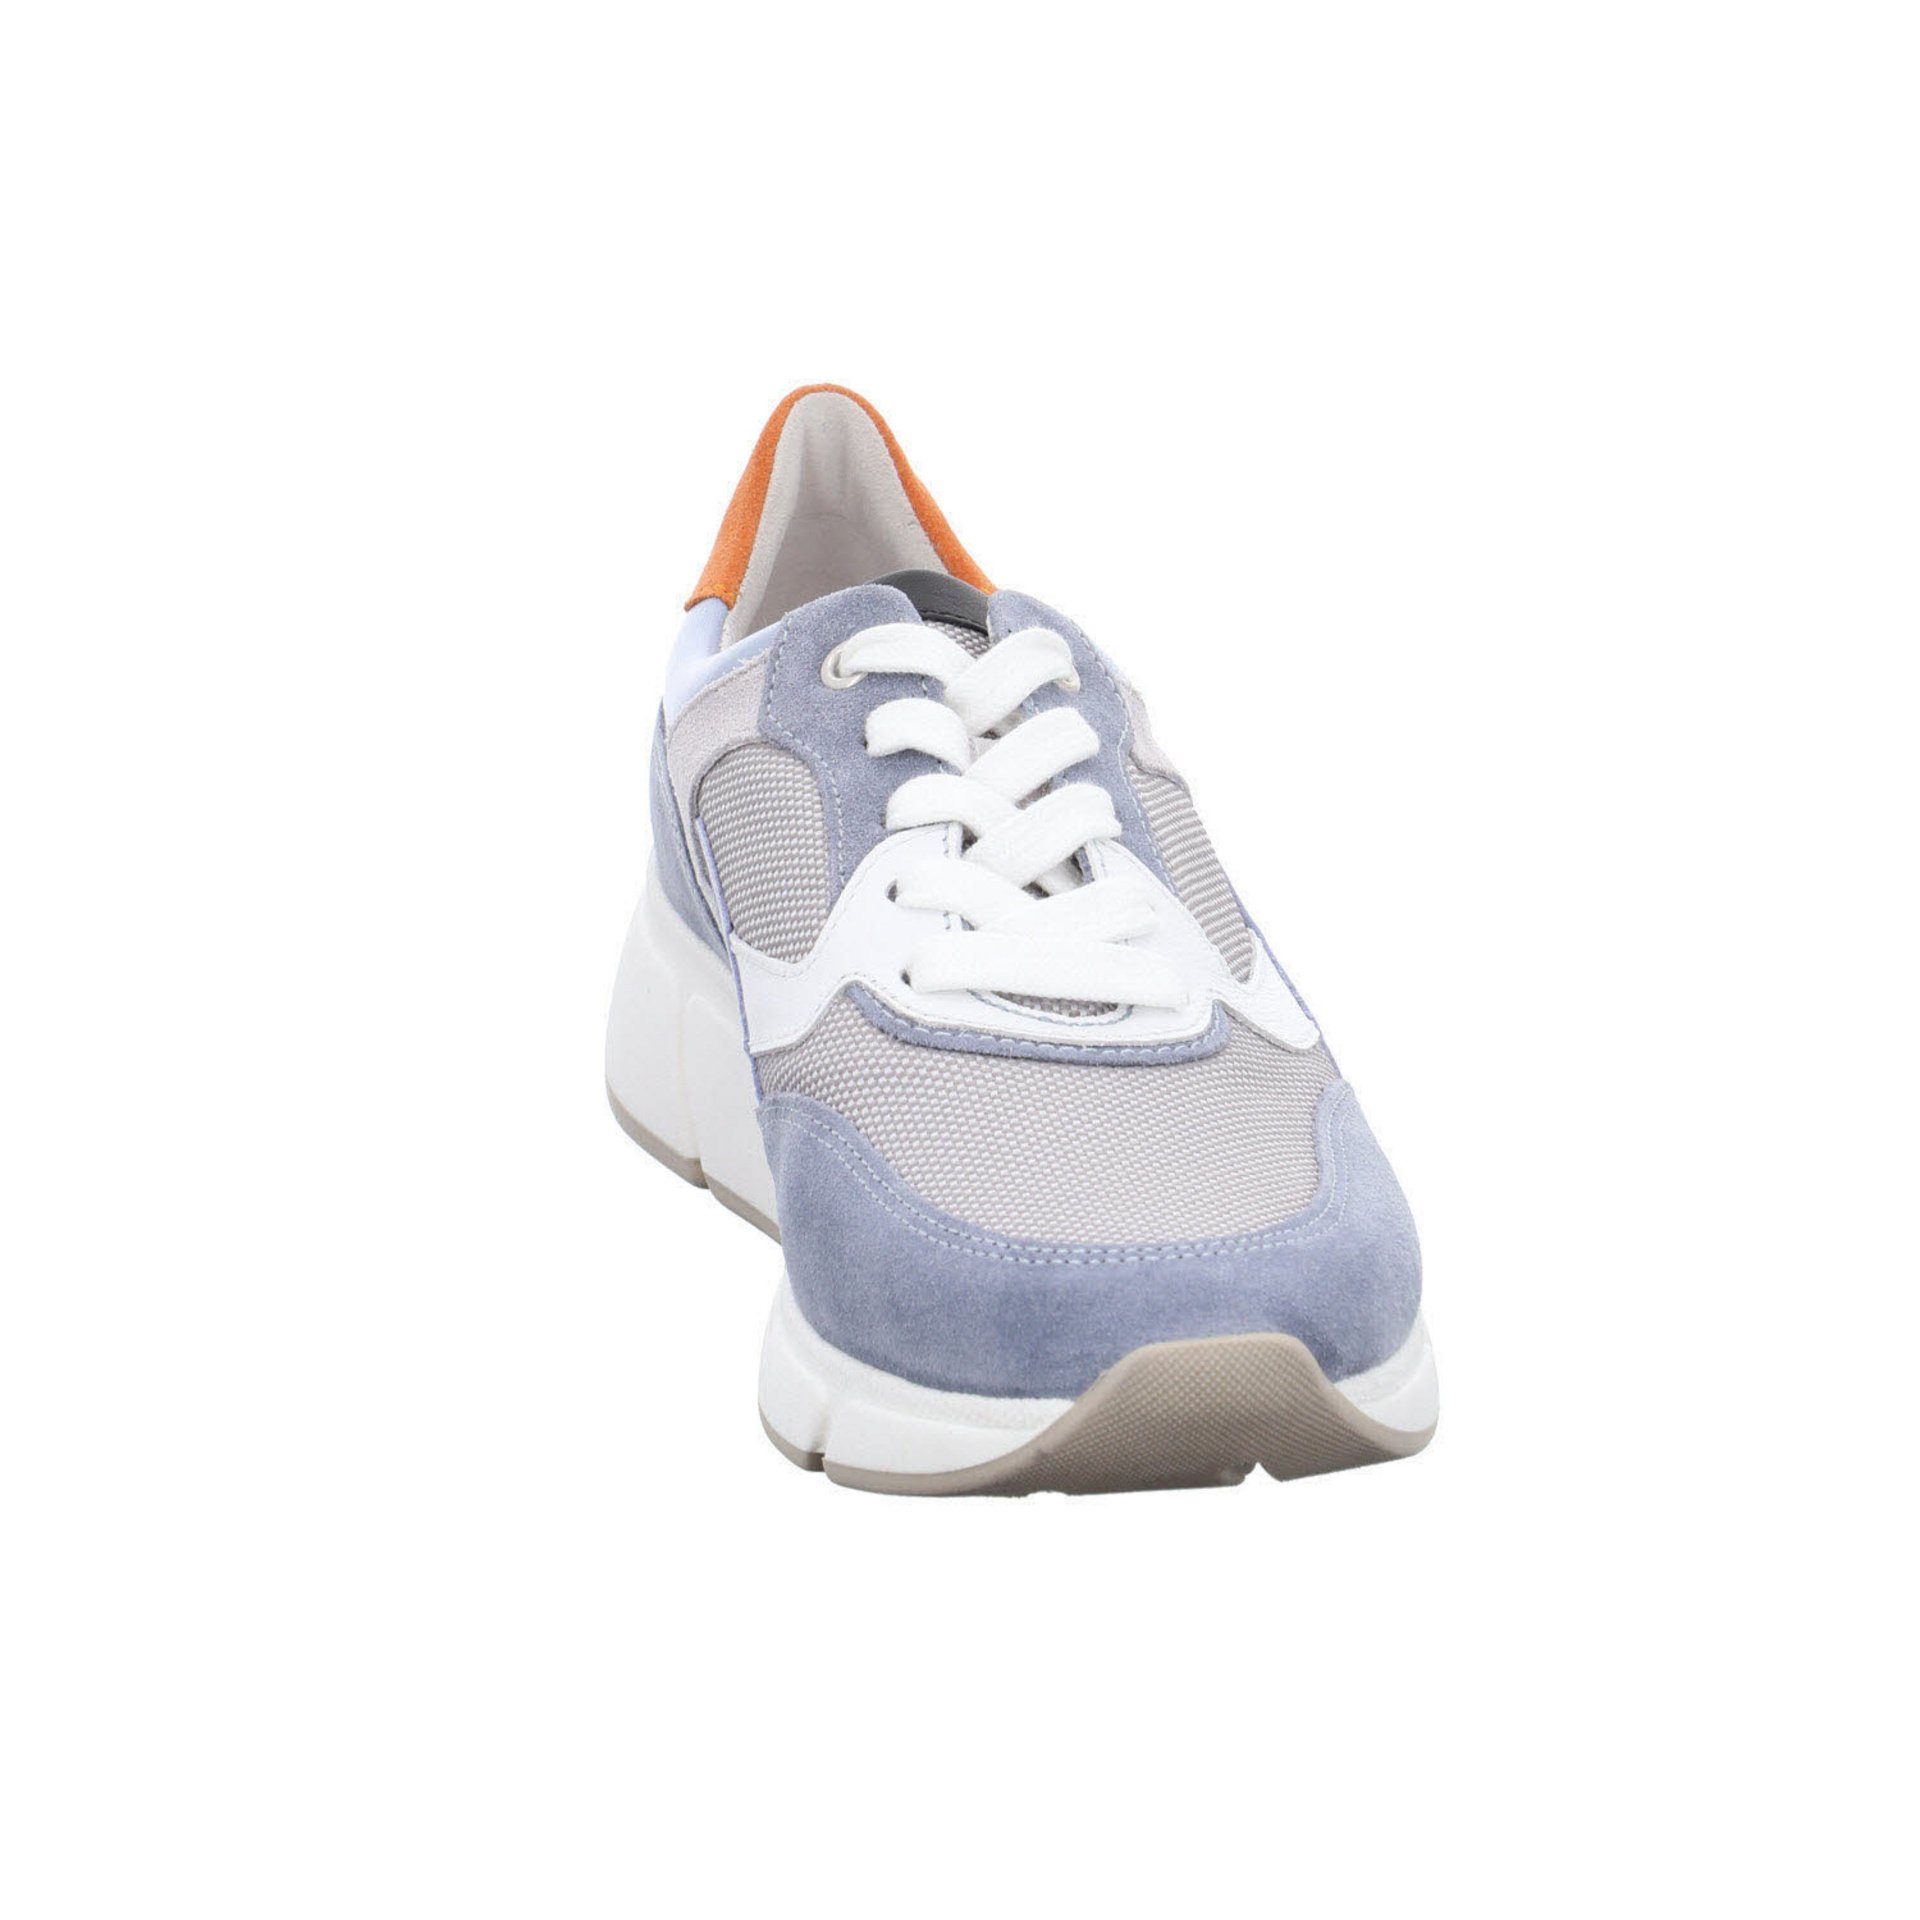 Gabor Damen Sneaker Leder-/Textilkombination Florenz cielo/grau/orange Schuhe Sneaker Sneaker